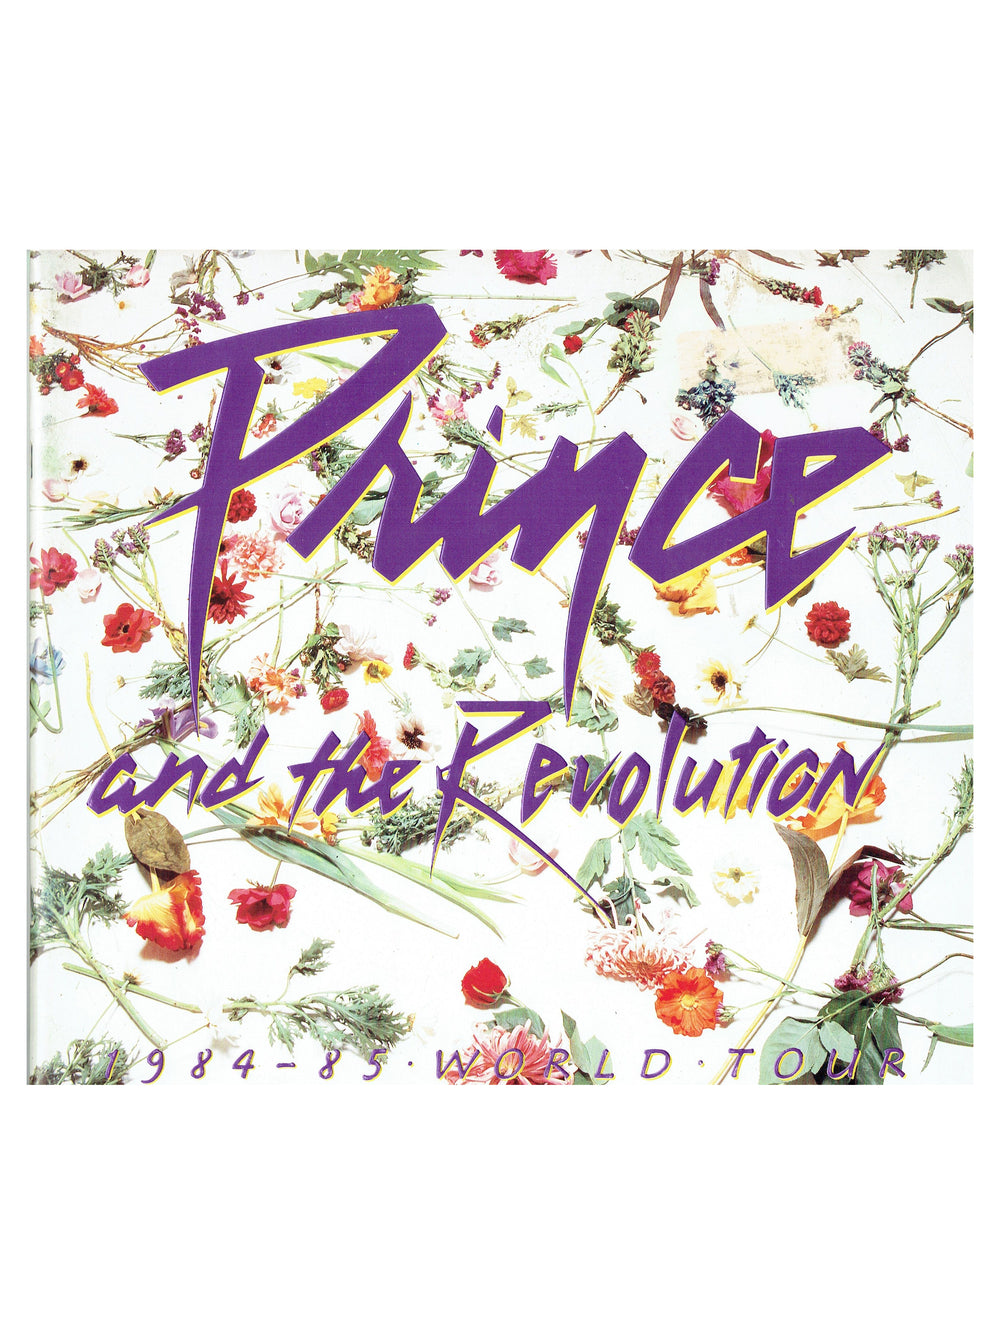 Prince – & The Revolution Purple Rain Tour Book Original Embossed Sleeve EX